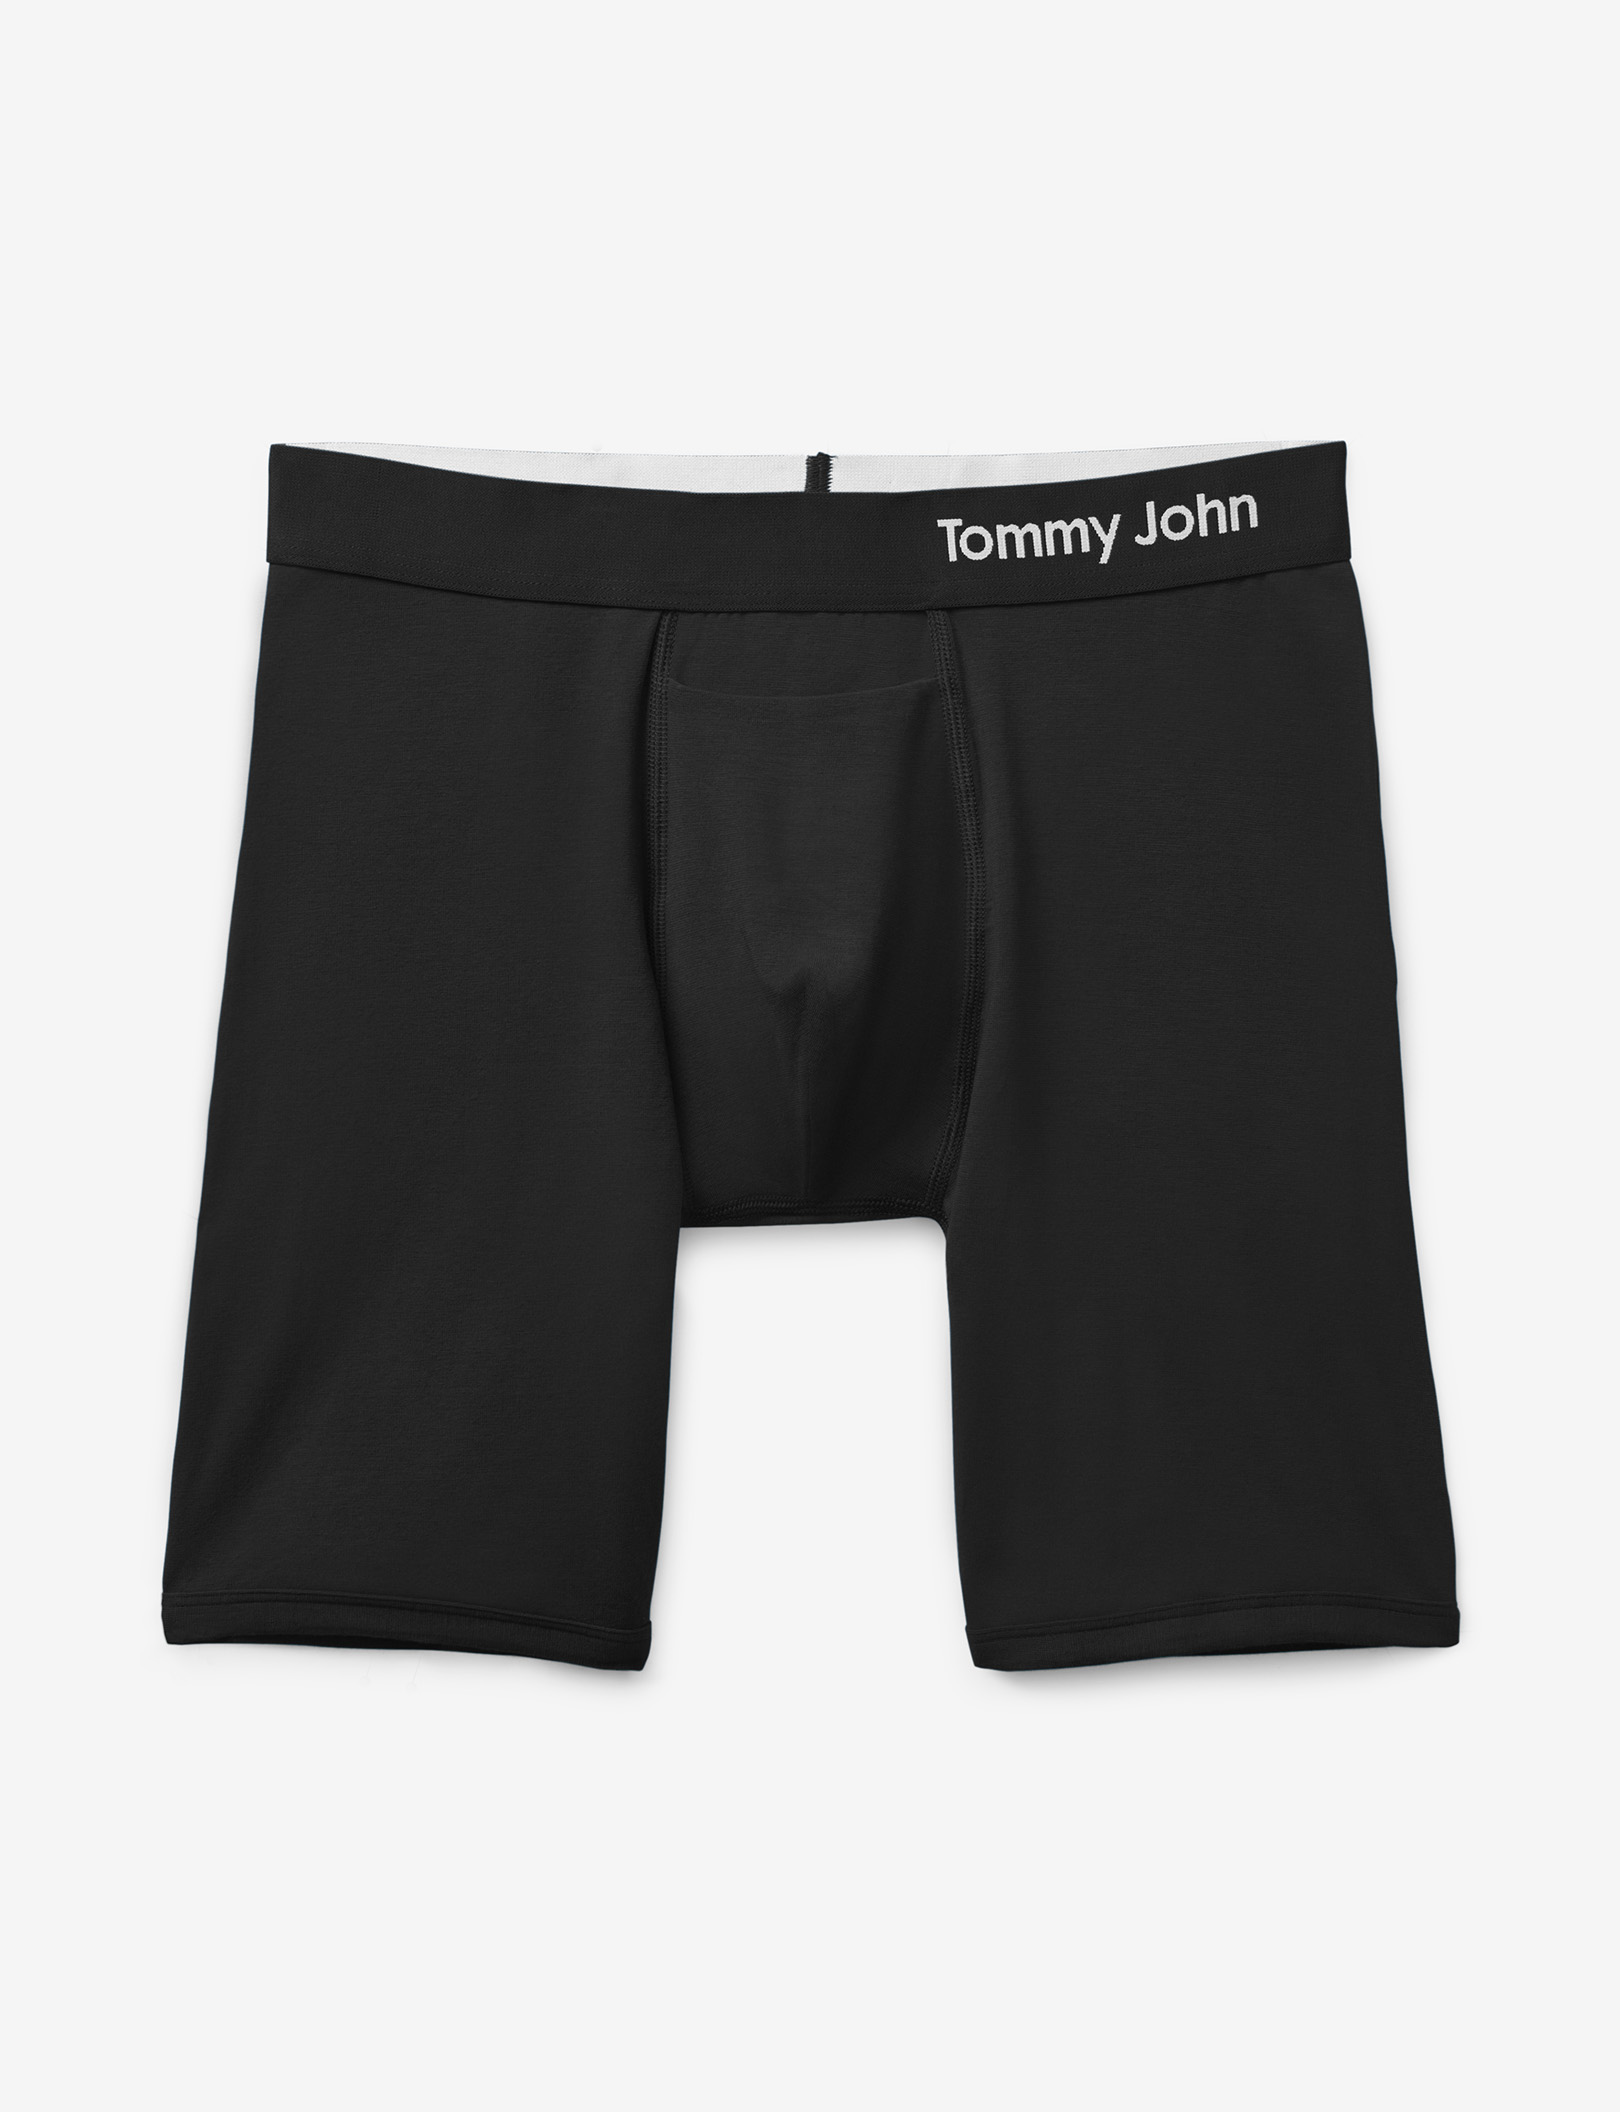 Tommy John Men's Underwear, Boxer Briefs, Second Skin Fabric Trunk